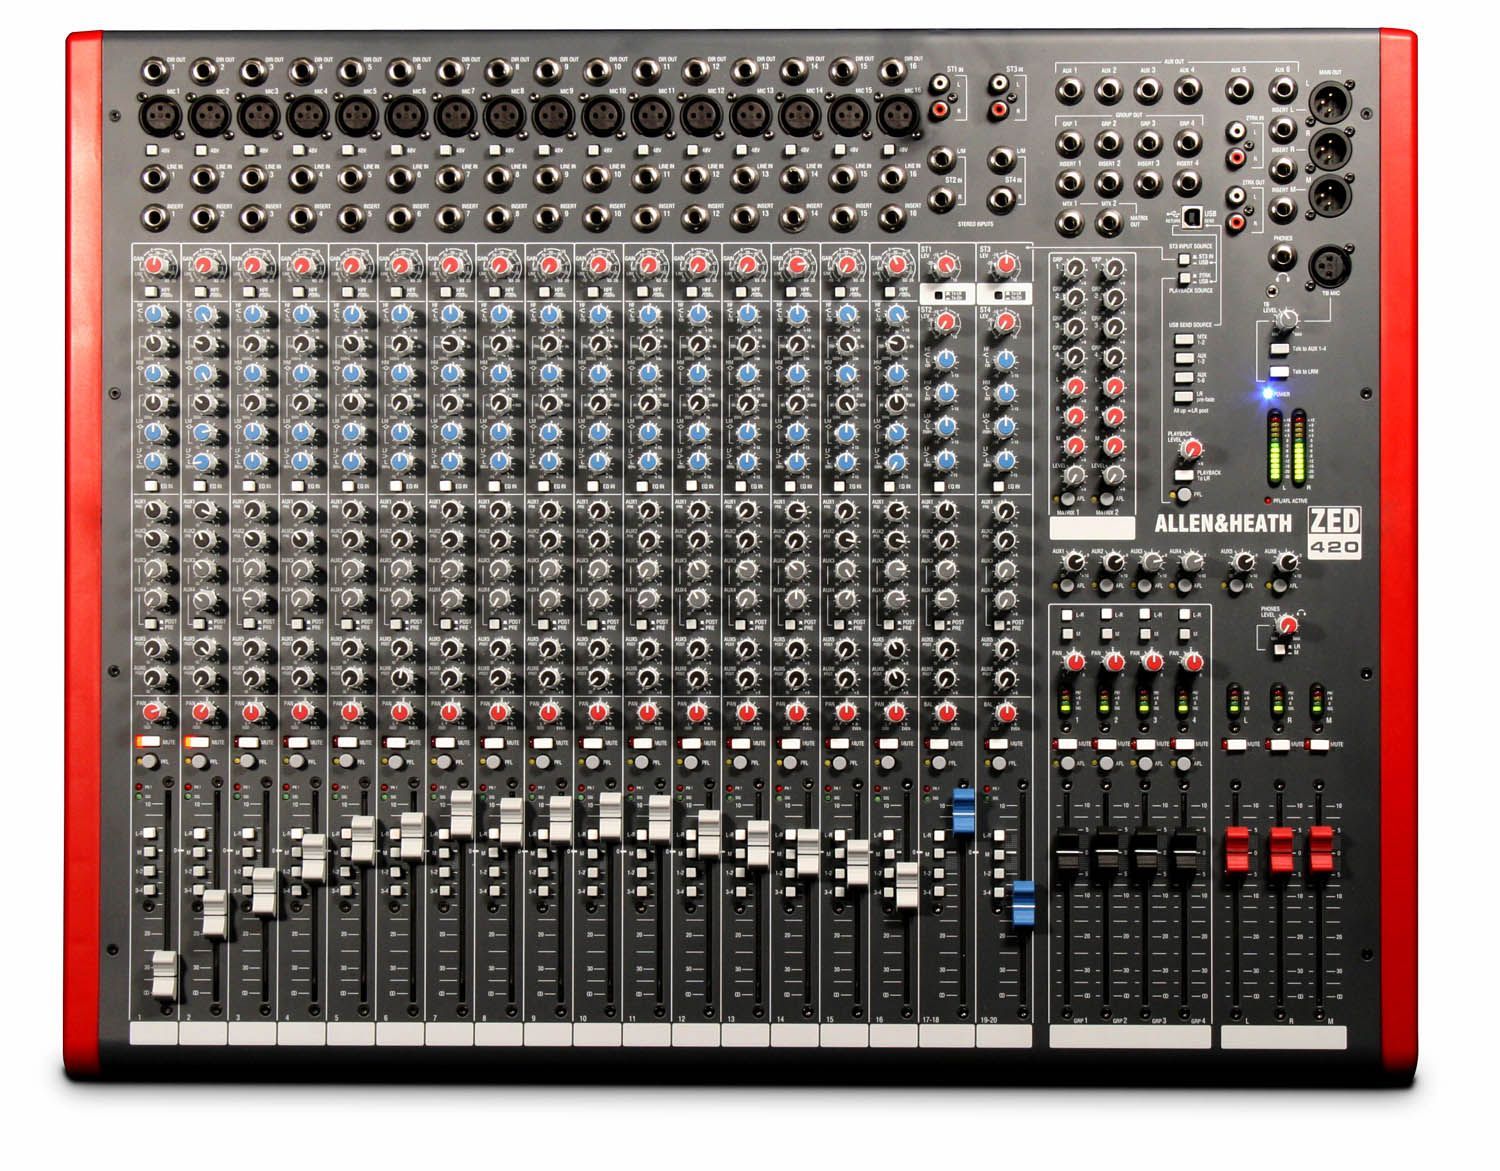 Allen Heath ZED 420 Mixer, Mischpult, 16 Mikrofonkanäle 4 StereoInputs, Software  - Onlineshop Musikhaus Markstein